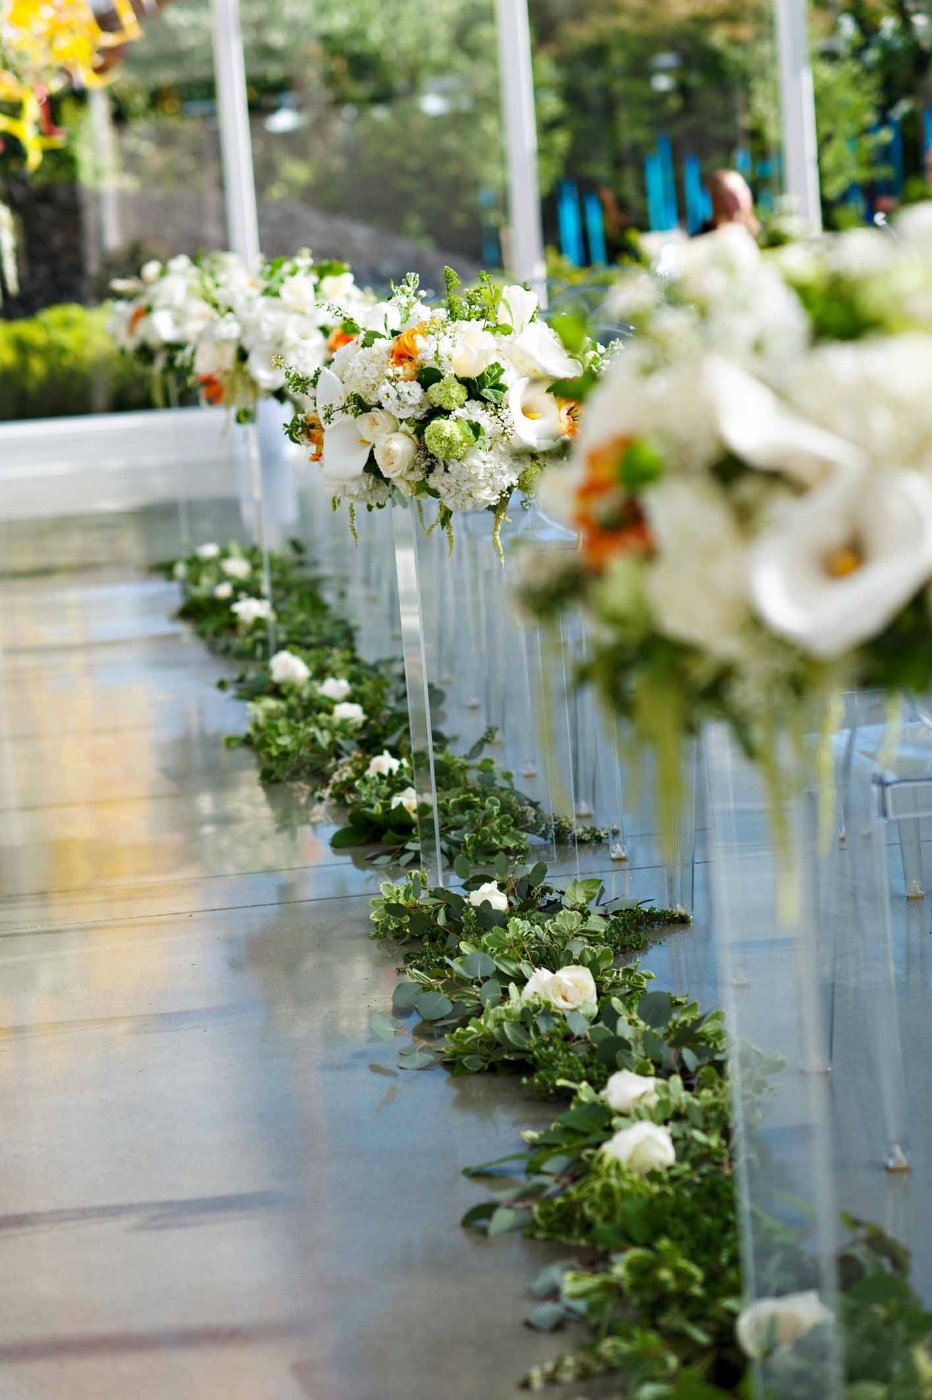 Wedding ceremony floral Designs by Flora Nova Design in Seattle.